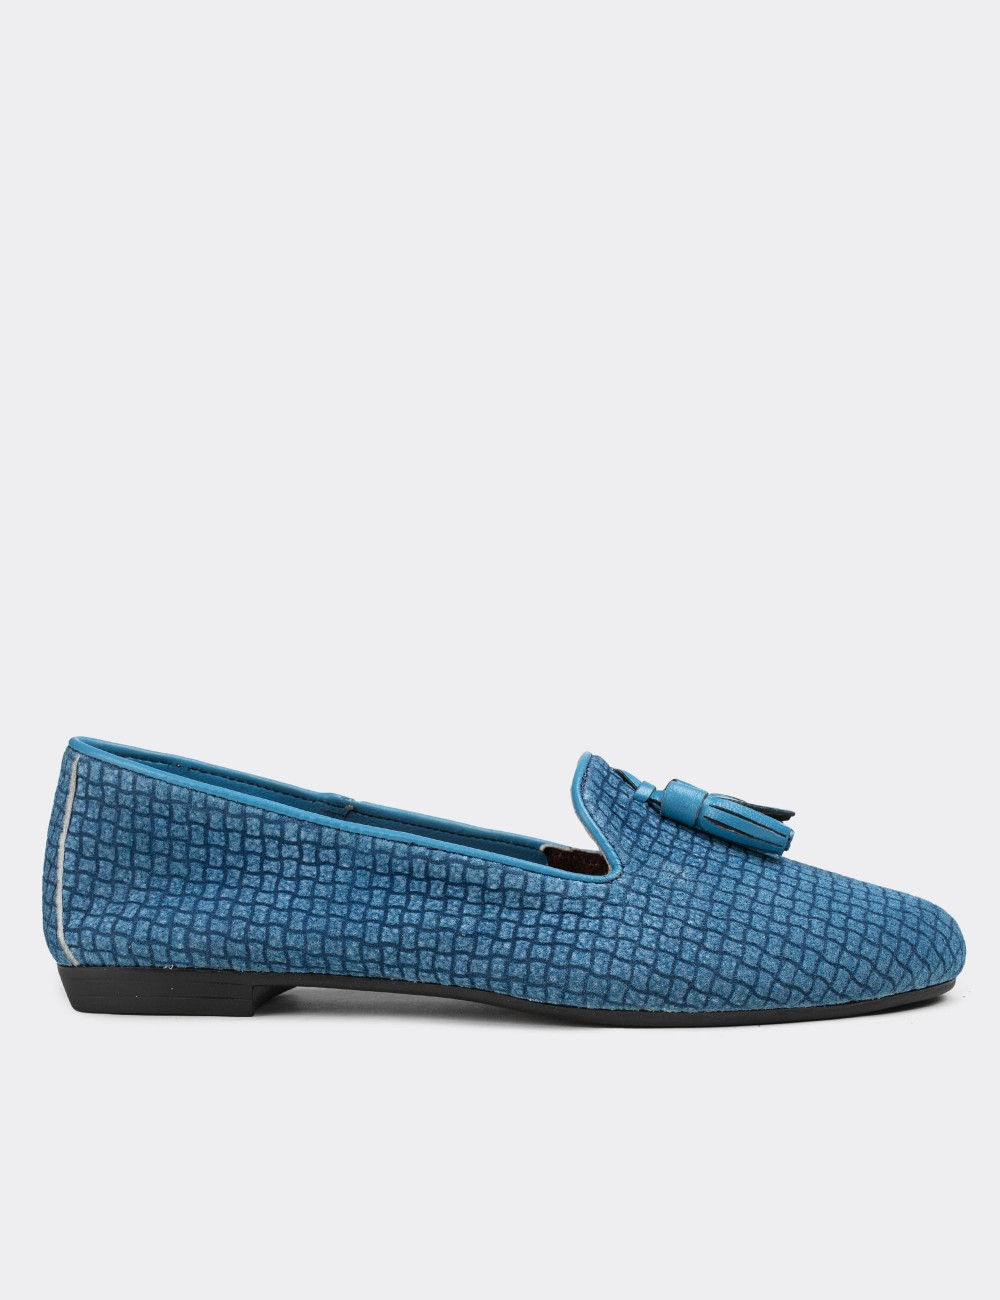 Blue Nubuck Leather Loafers  - E3204ZMVIC01